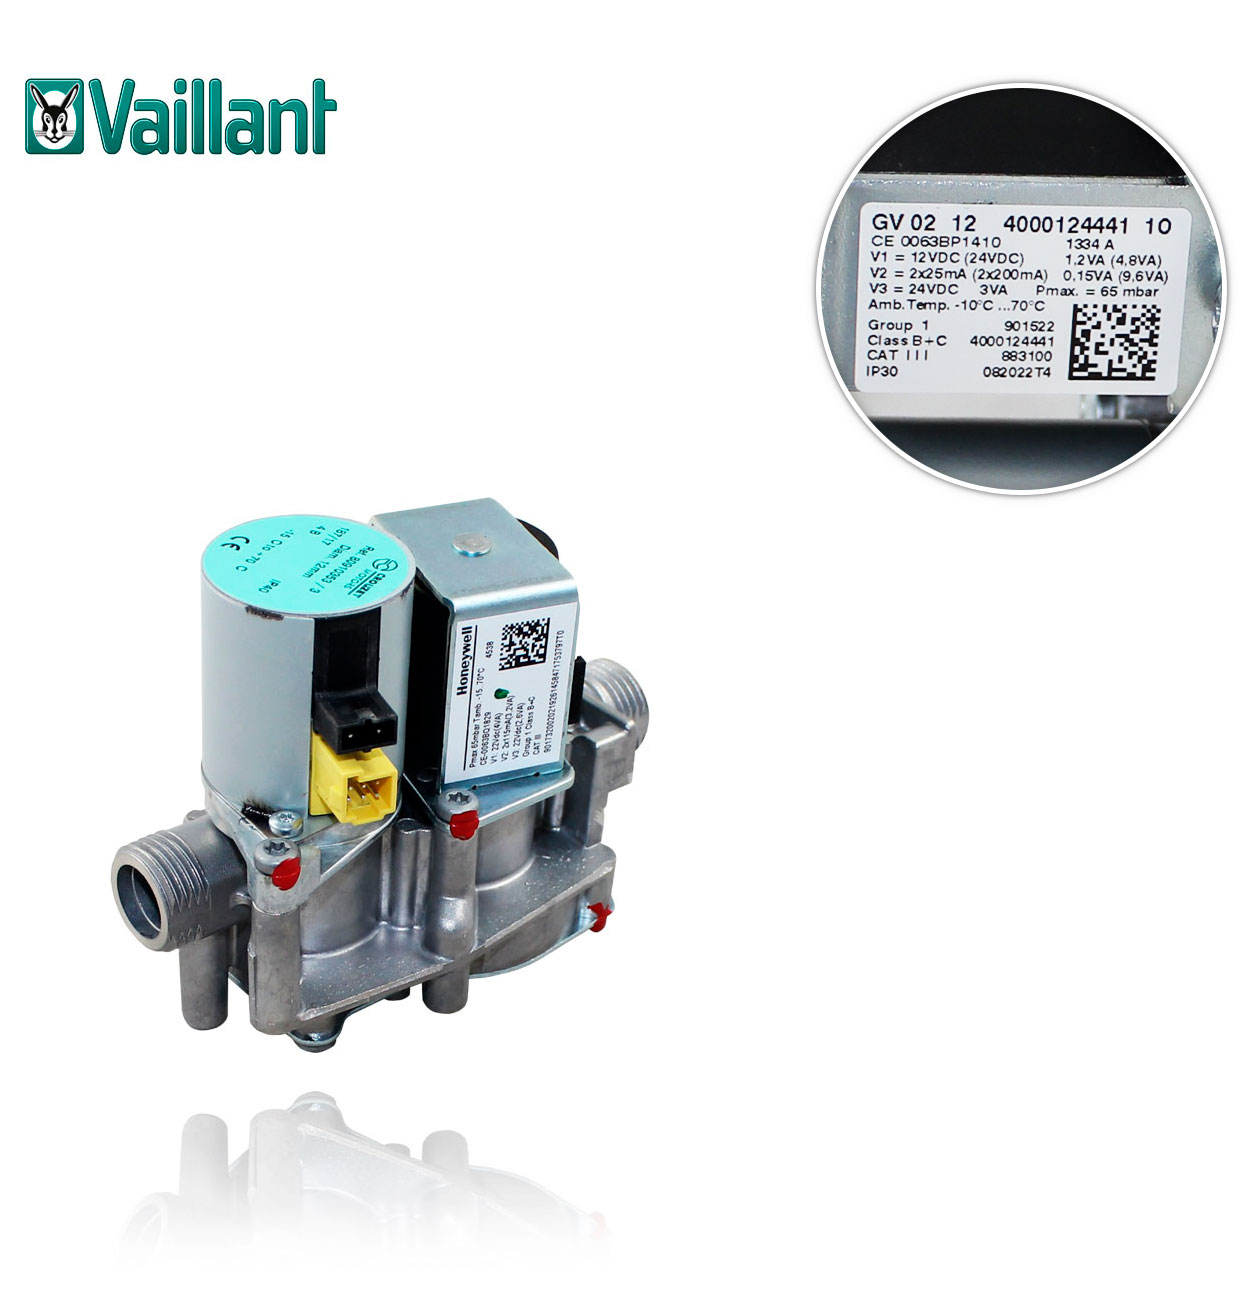 VAILLANT 0020019991 NATURAL GAS REGULATOR BLOCK